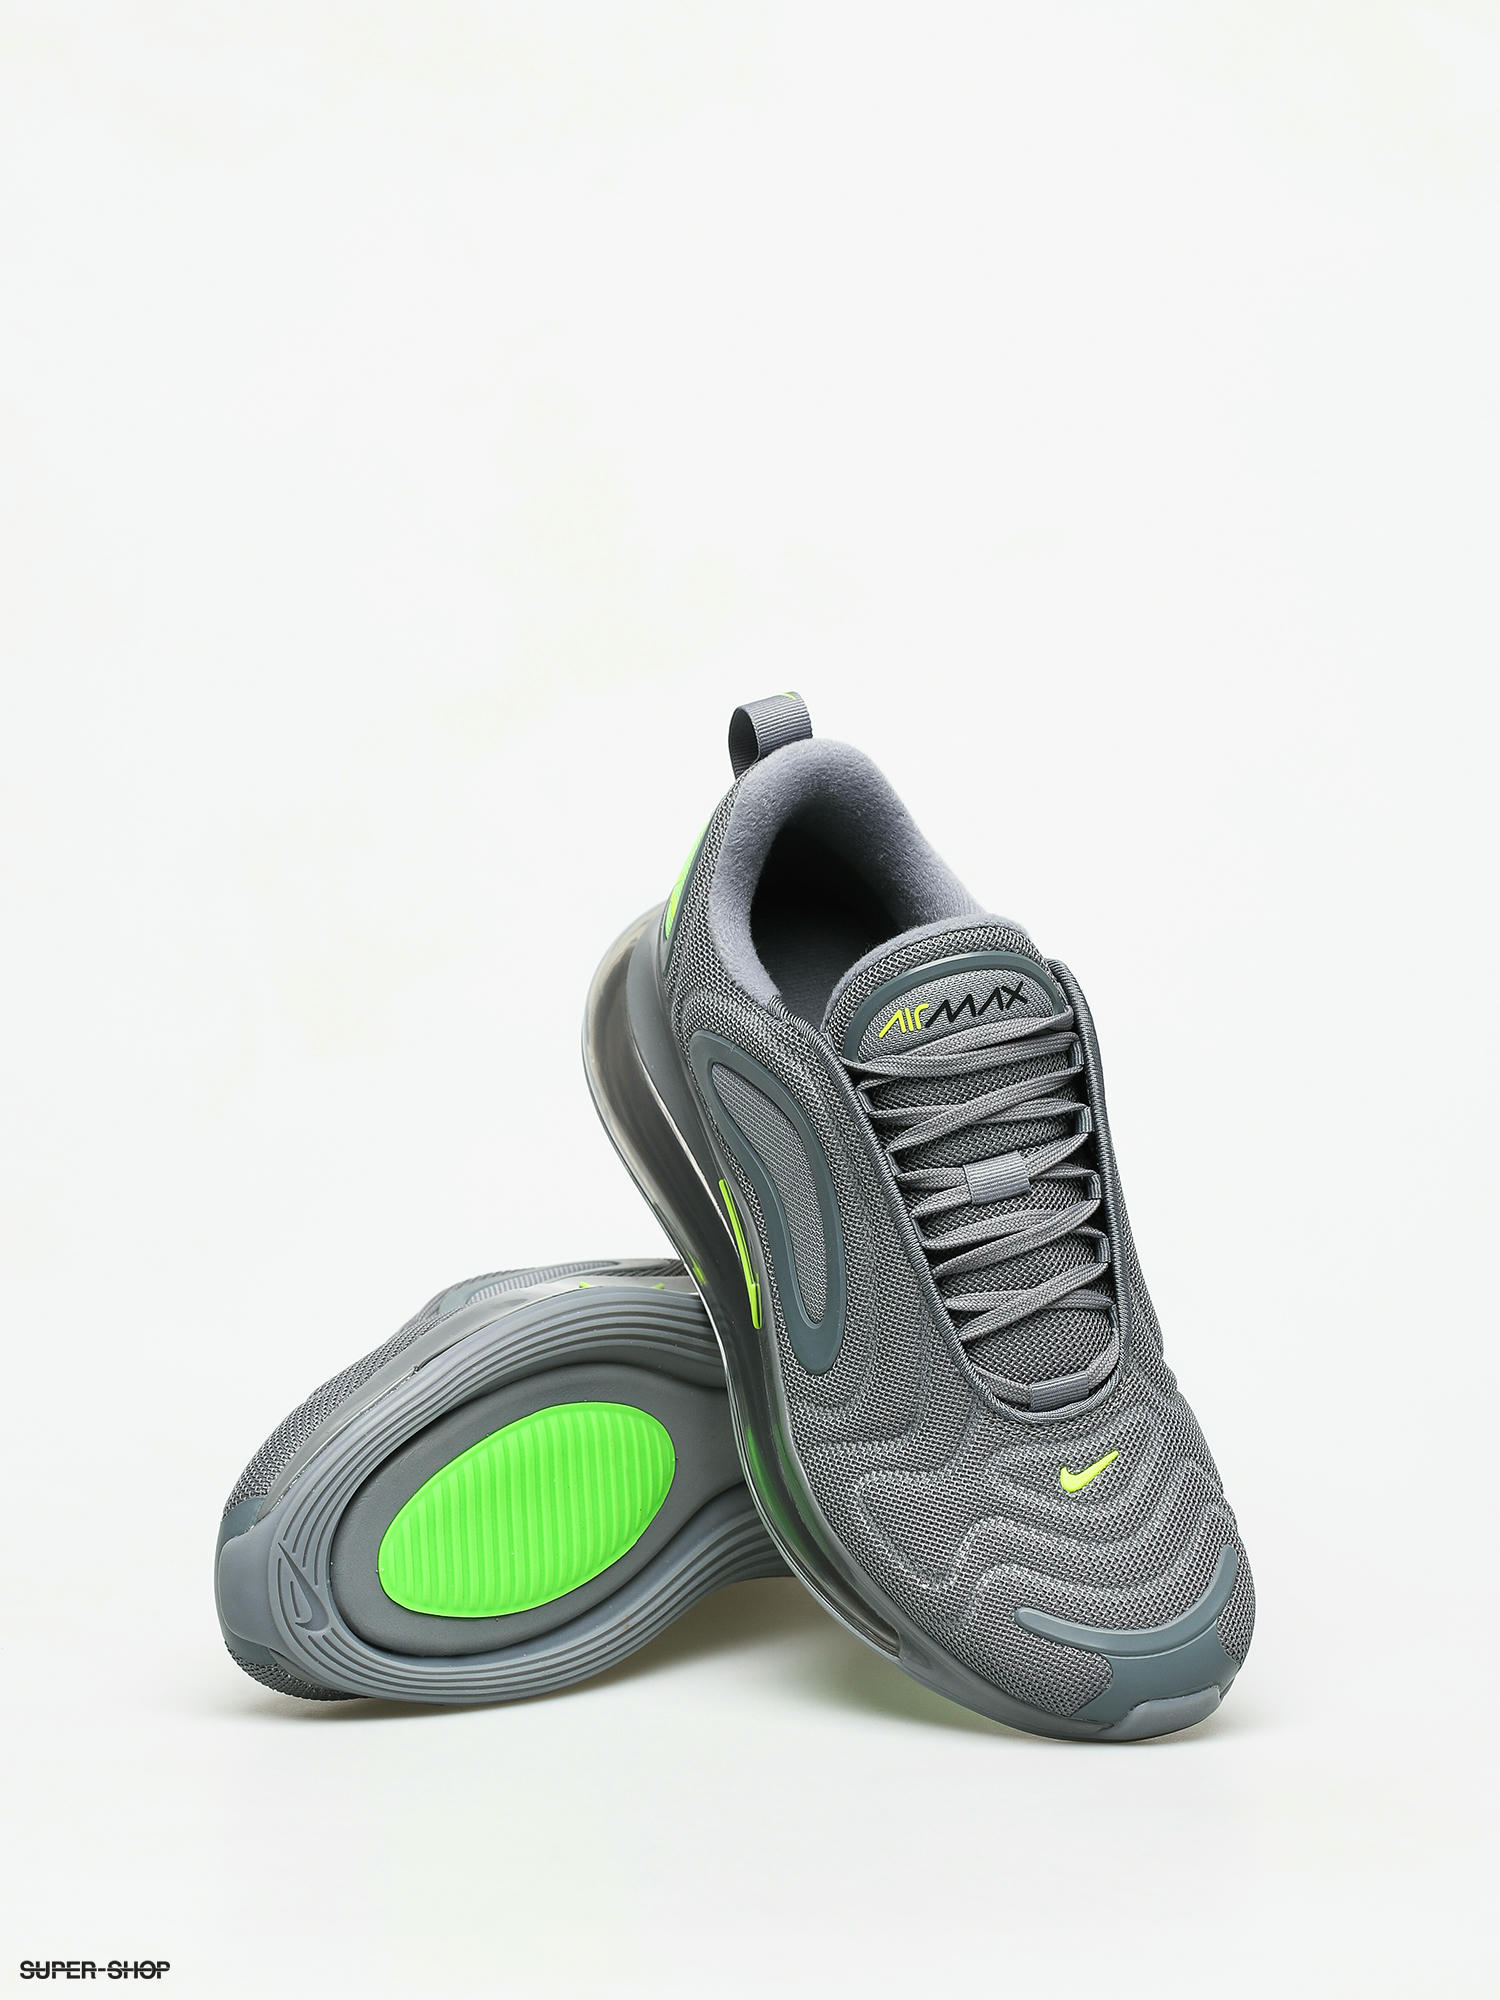 Nike Air Max 720 Cool Grey/Volt - CT2204-001